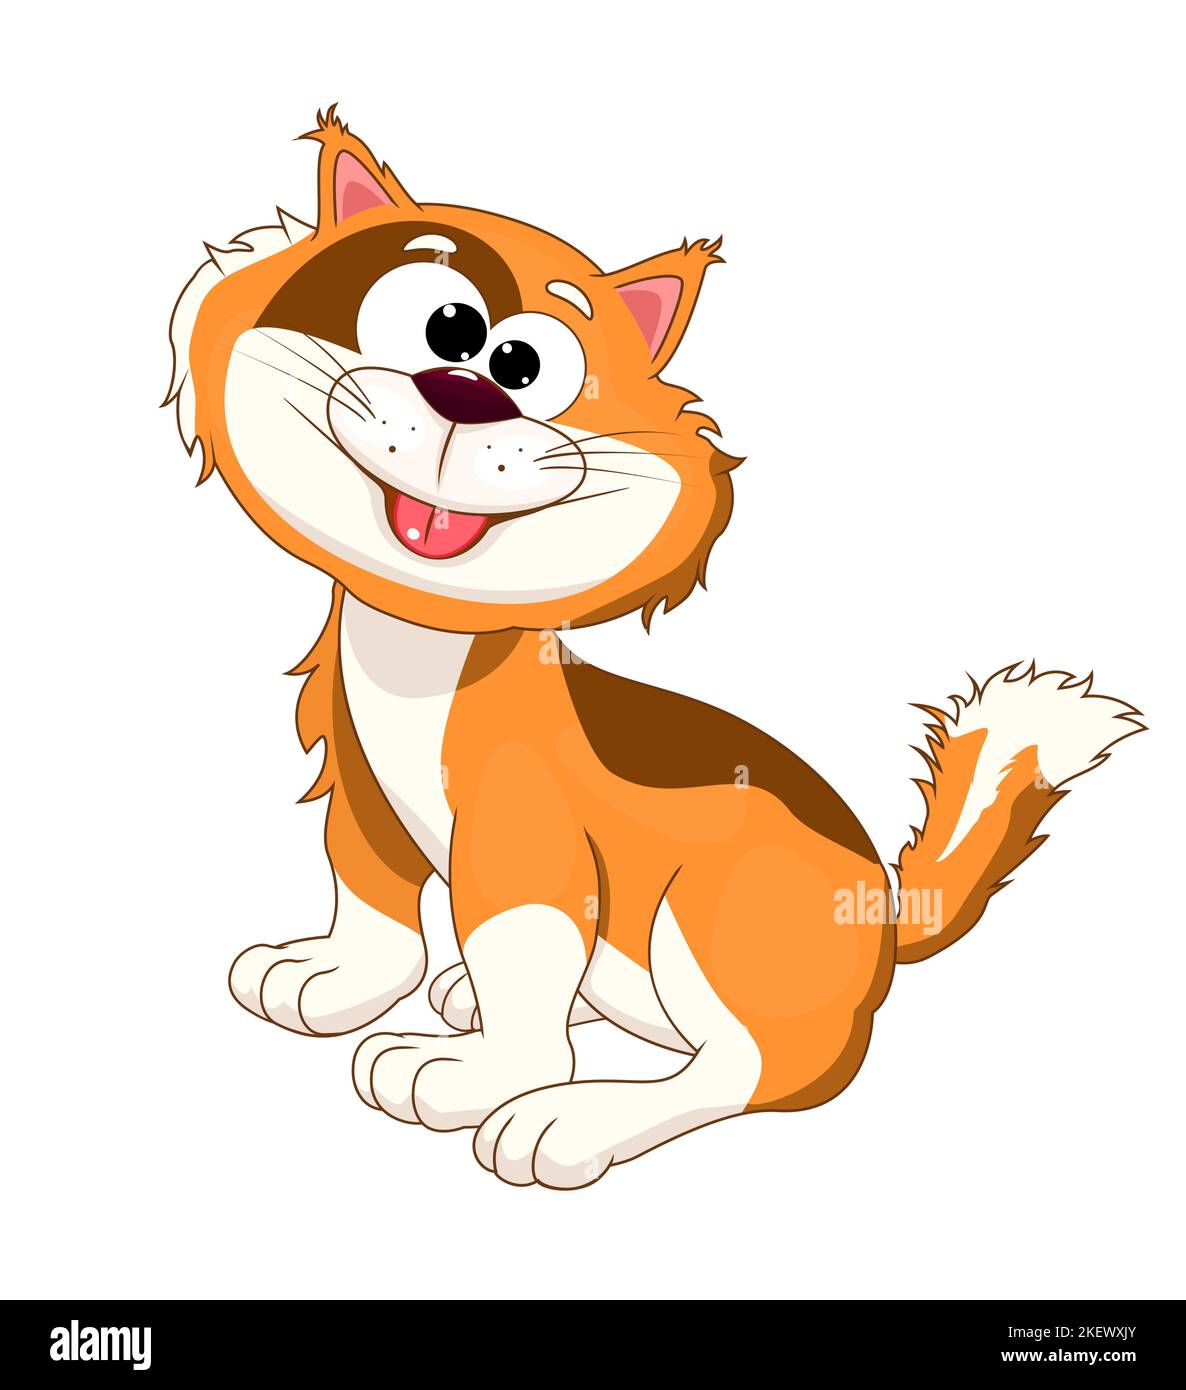 Cartoon red cat on a white background. Joyful, smiling kitten. Stock Vector